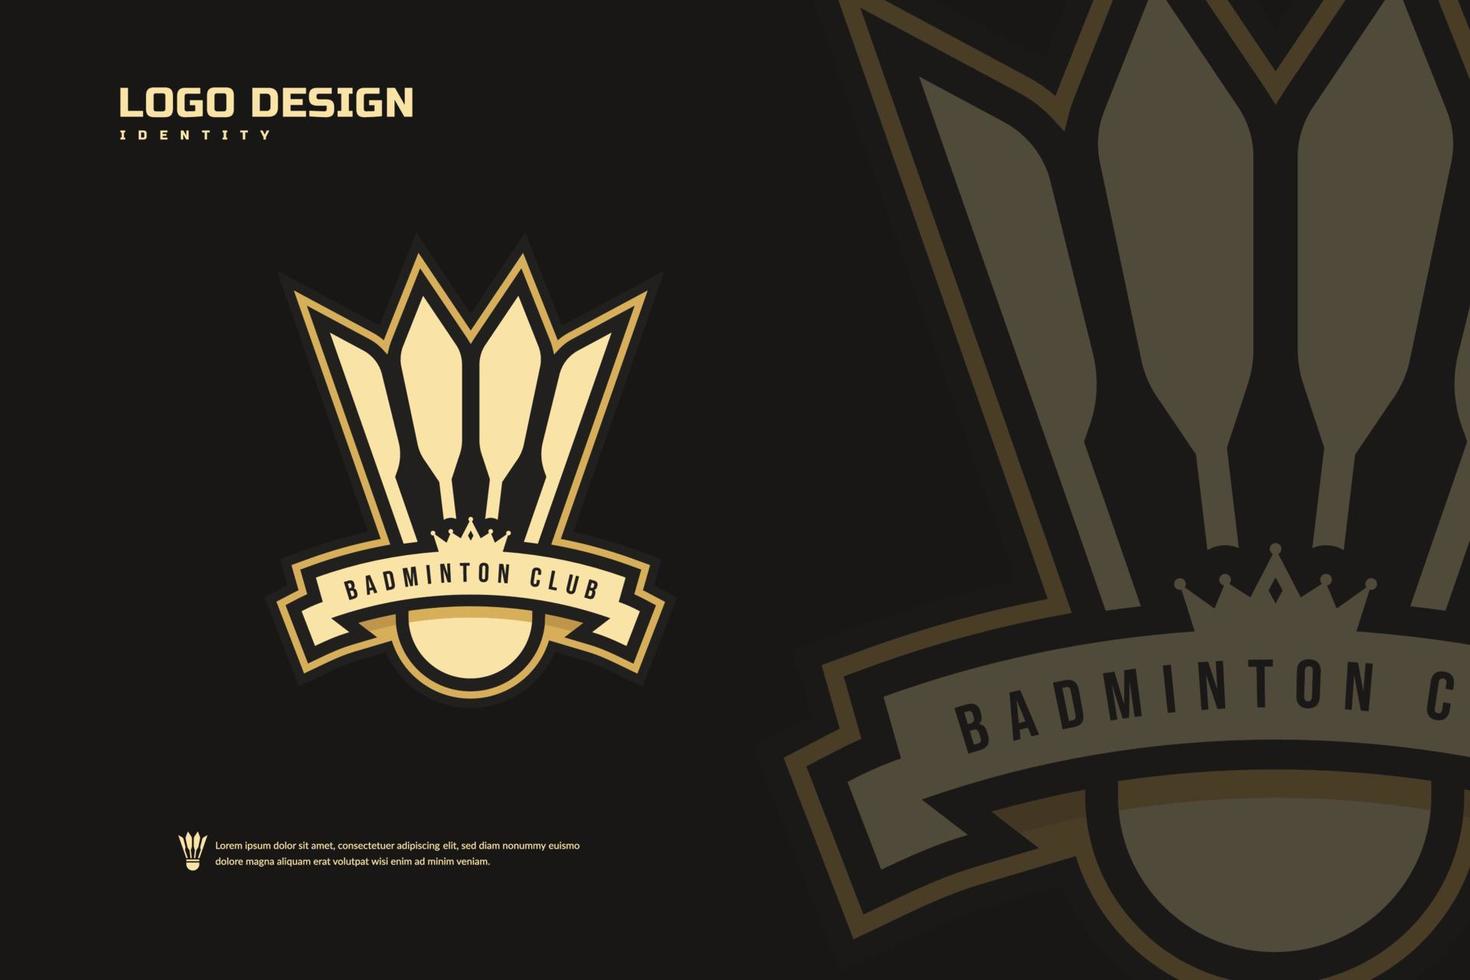 logotipo do clube de badminton, modelo de emblemas de torneio de badminton. identidade da equipe esportiva, ilustrações vetoriais de design de crachá abstrato vetor